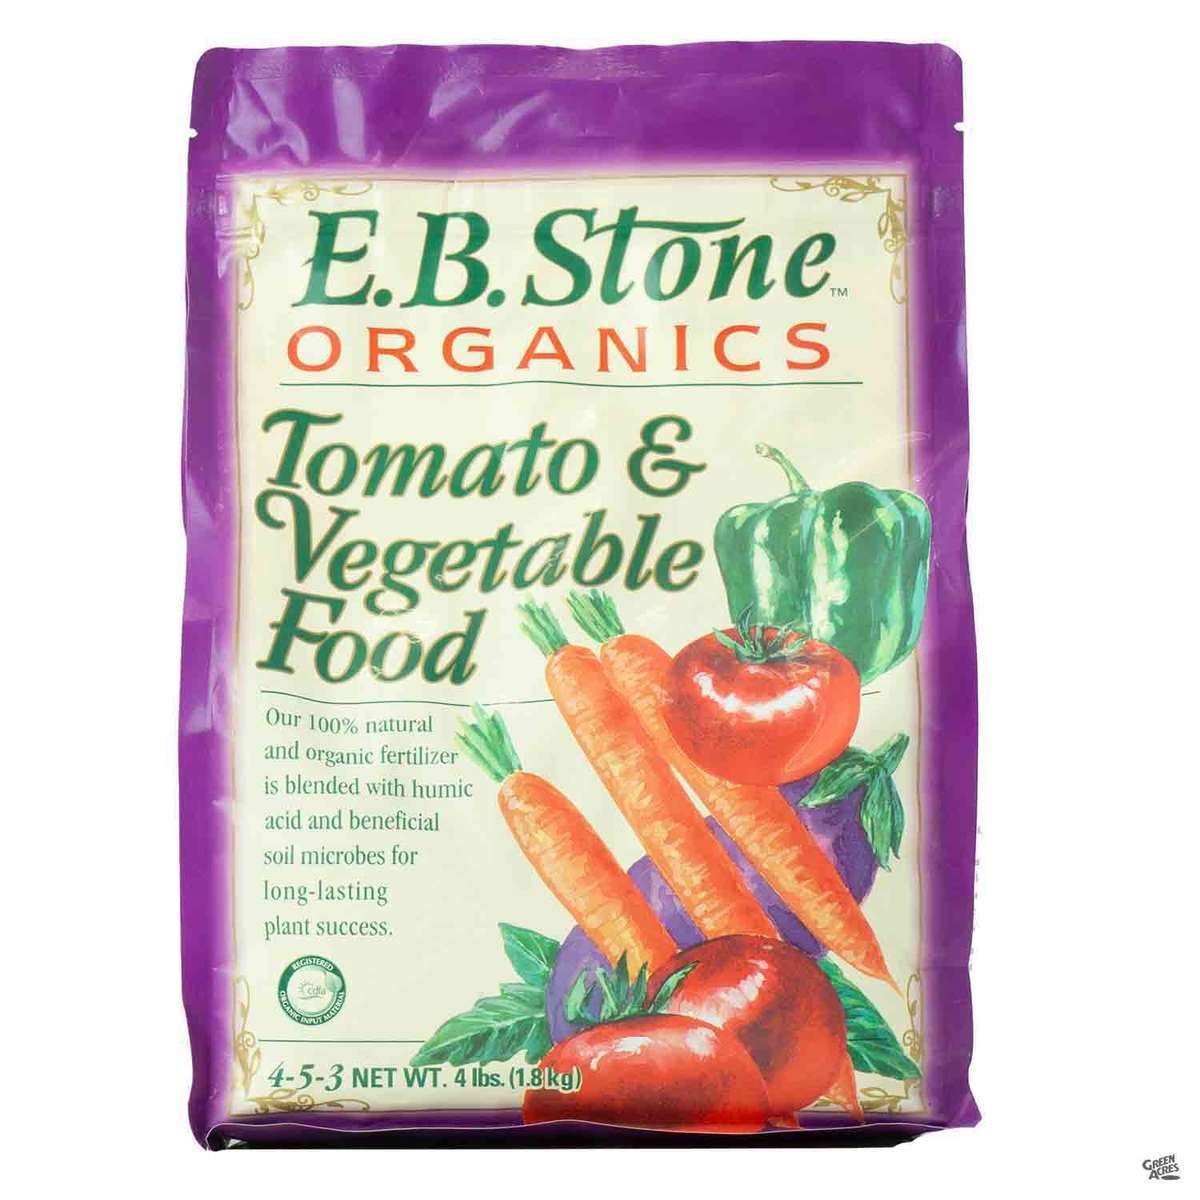 E.B. Stone™ Organics Tomato & Vegetable Food 